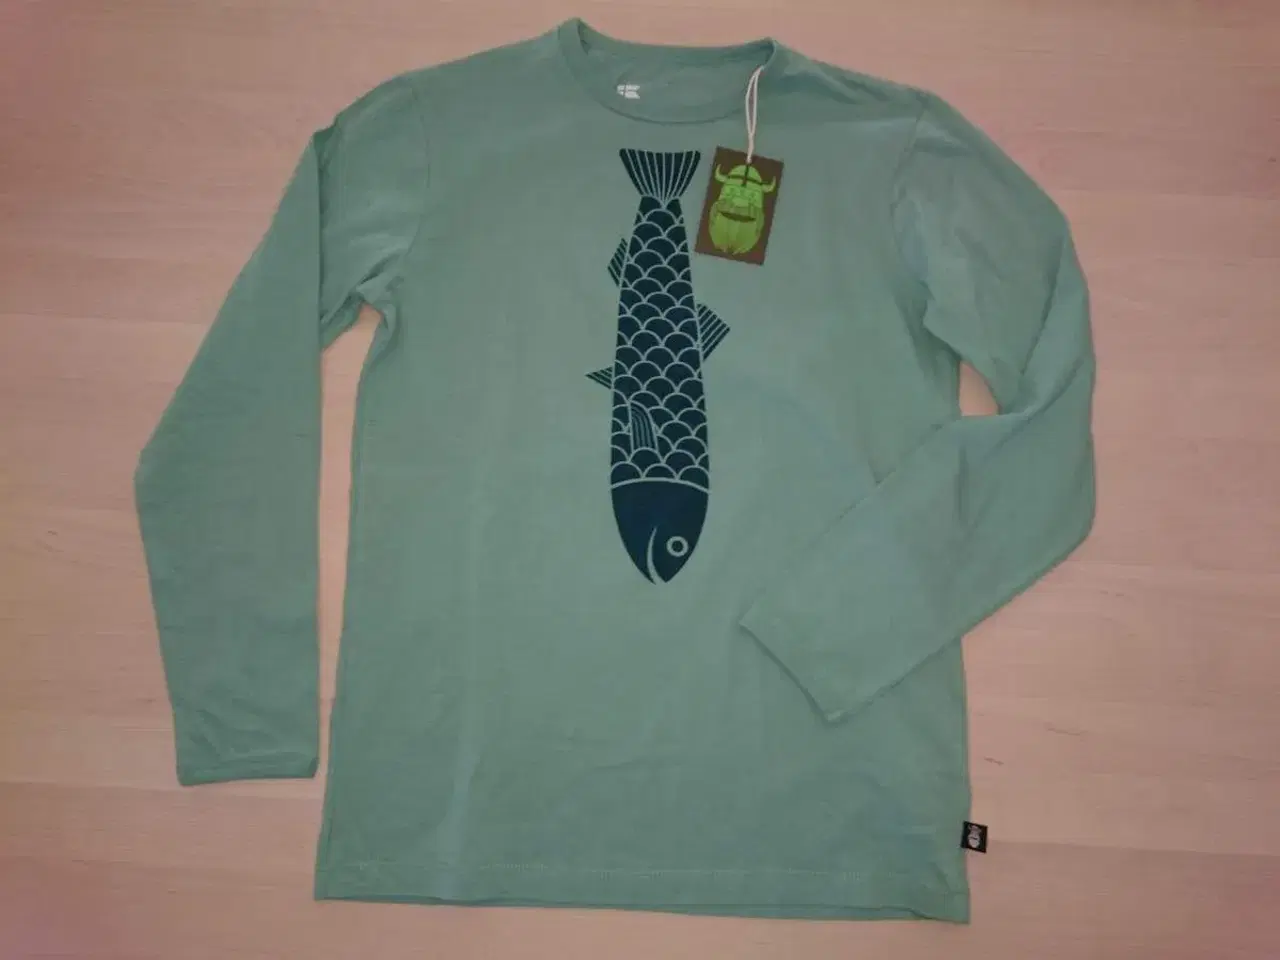 Billede 1 - Ny Danefæ "fiske slips" bluse. Str 152